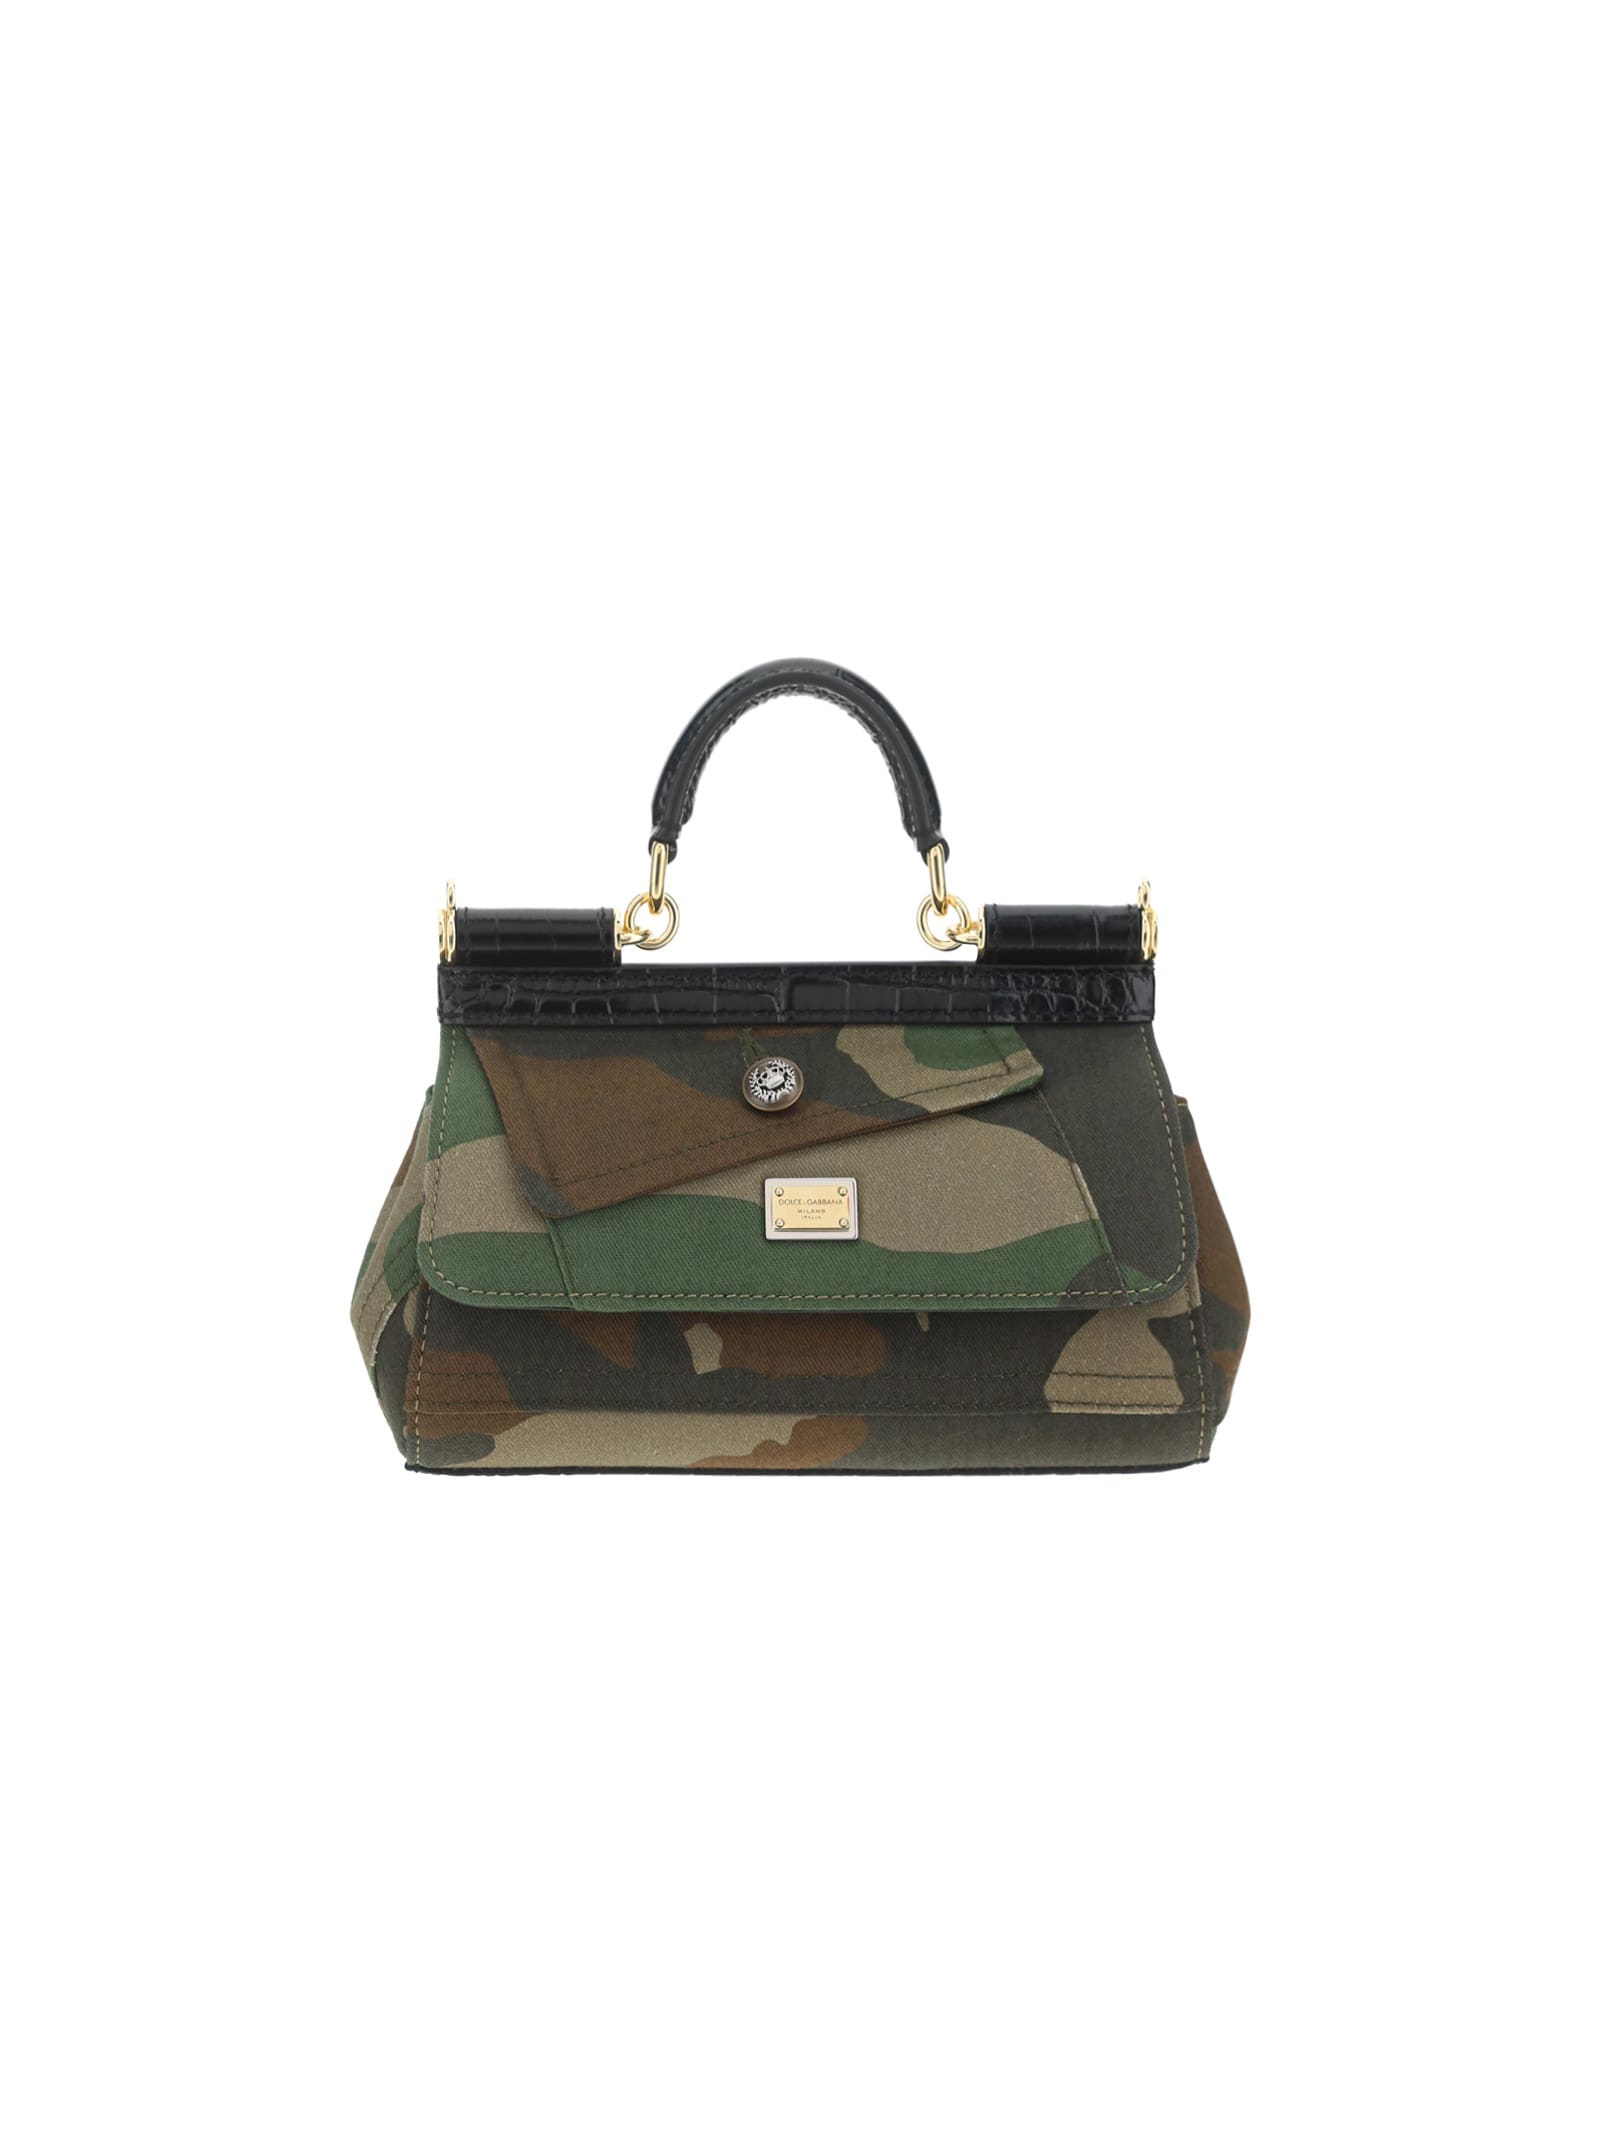 Dolce & Gabbana Patchwork Handbag